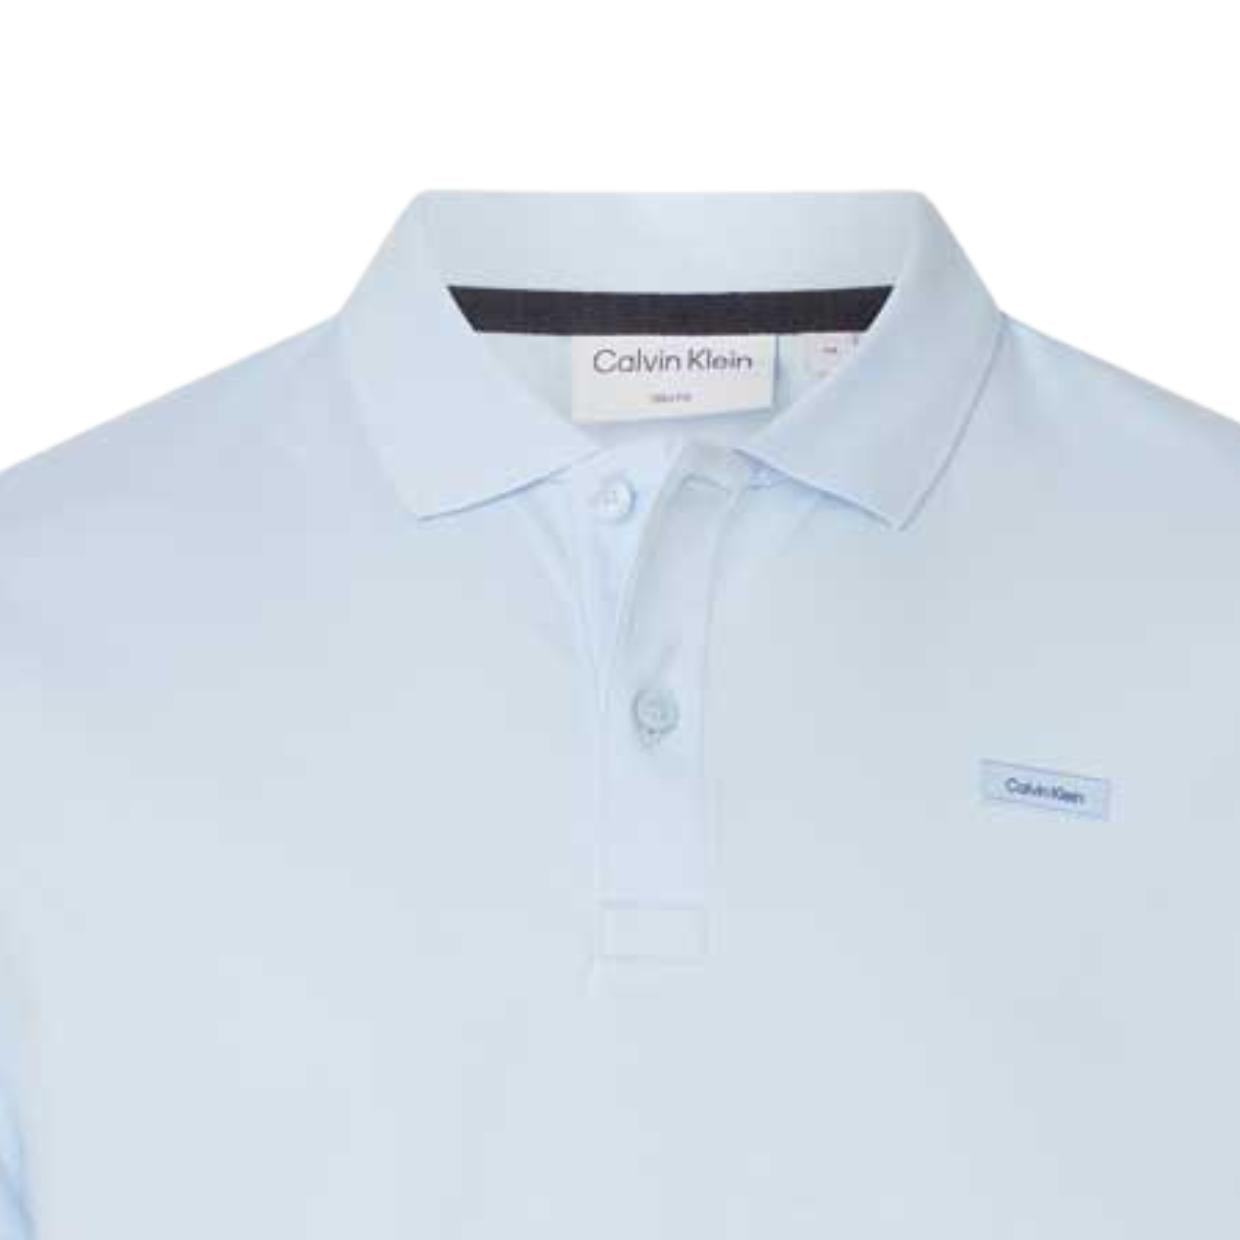 Calvin Klein Smooth Cotton Slim Fit Blue Polo Shirt